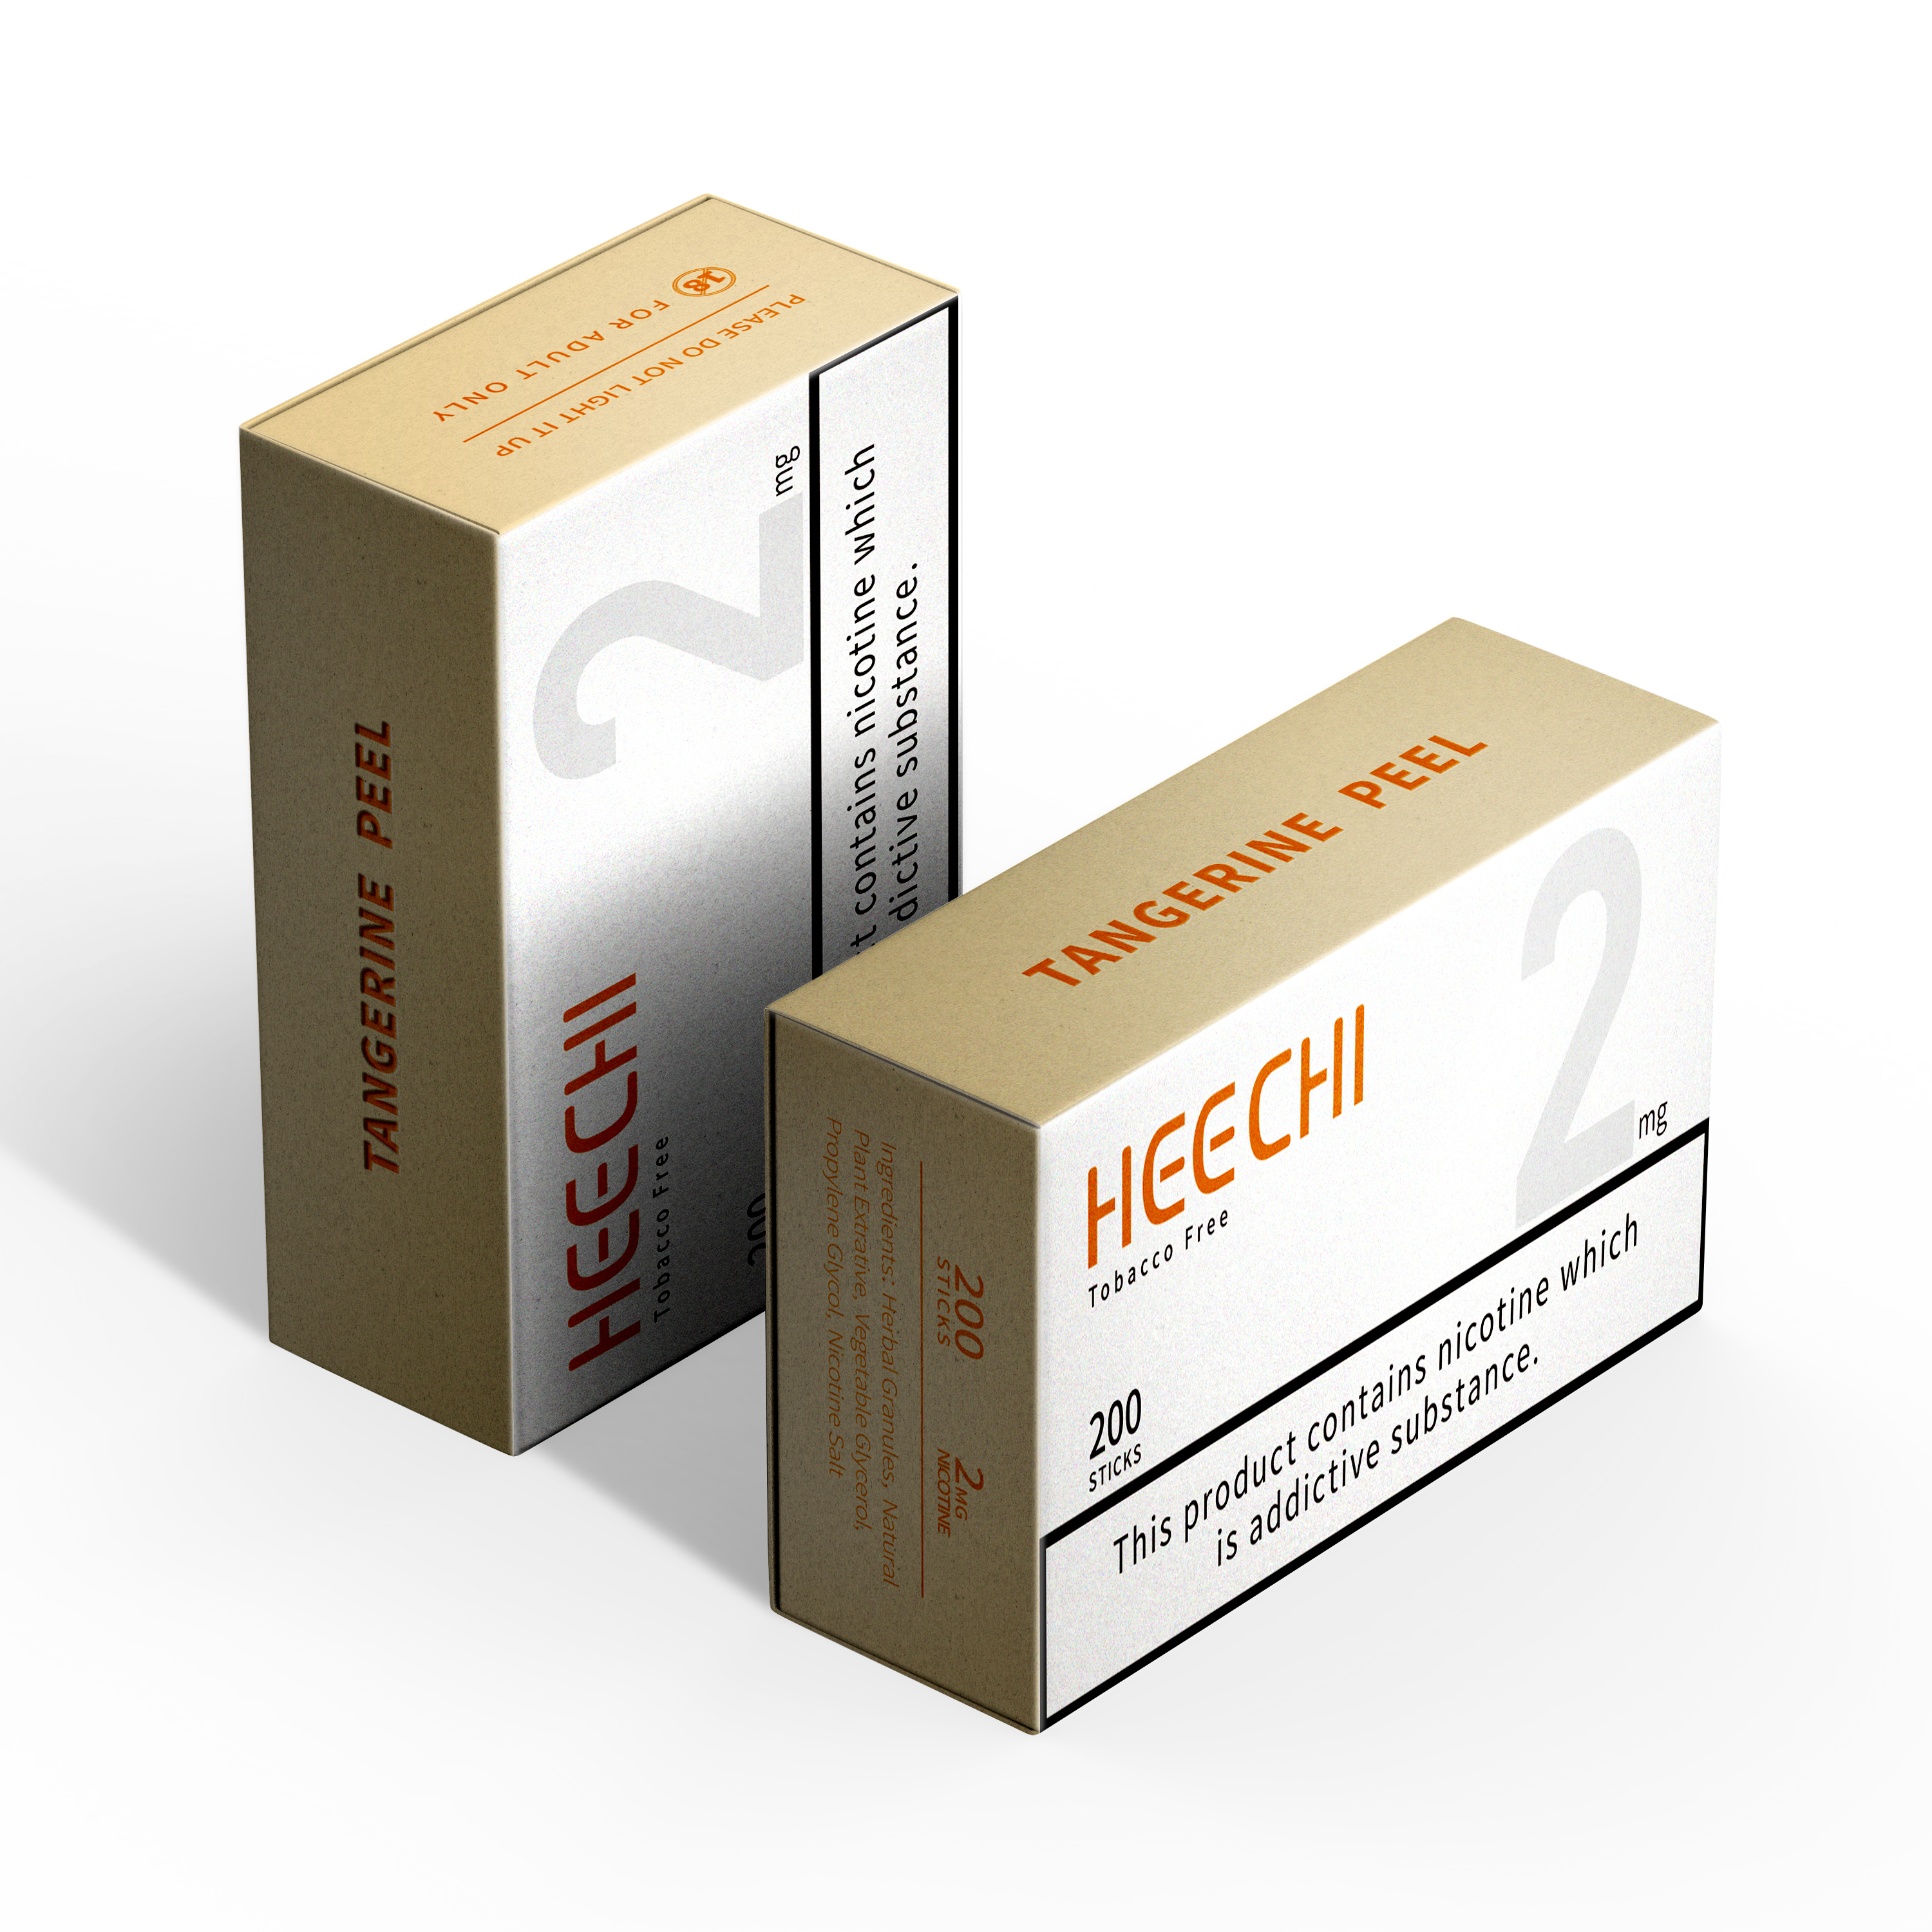 HEECHI Φλούδα μανταρινιού Nicotine HNB Herbal Stick